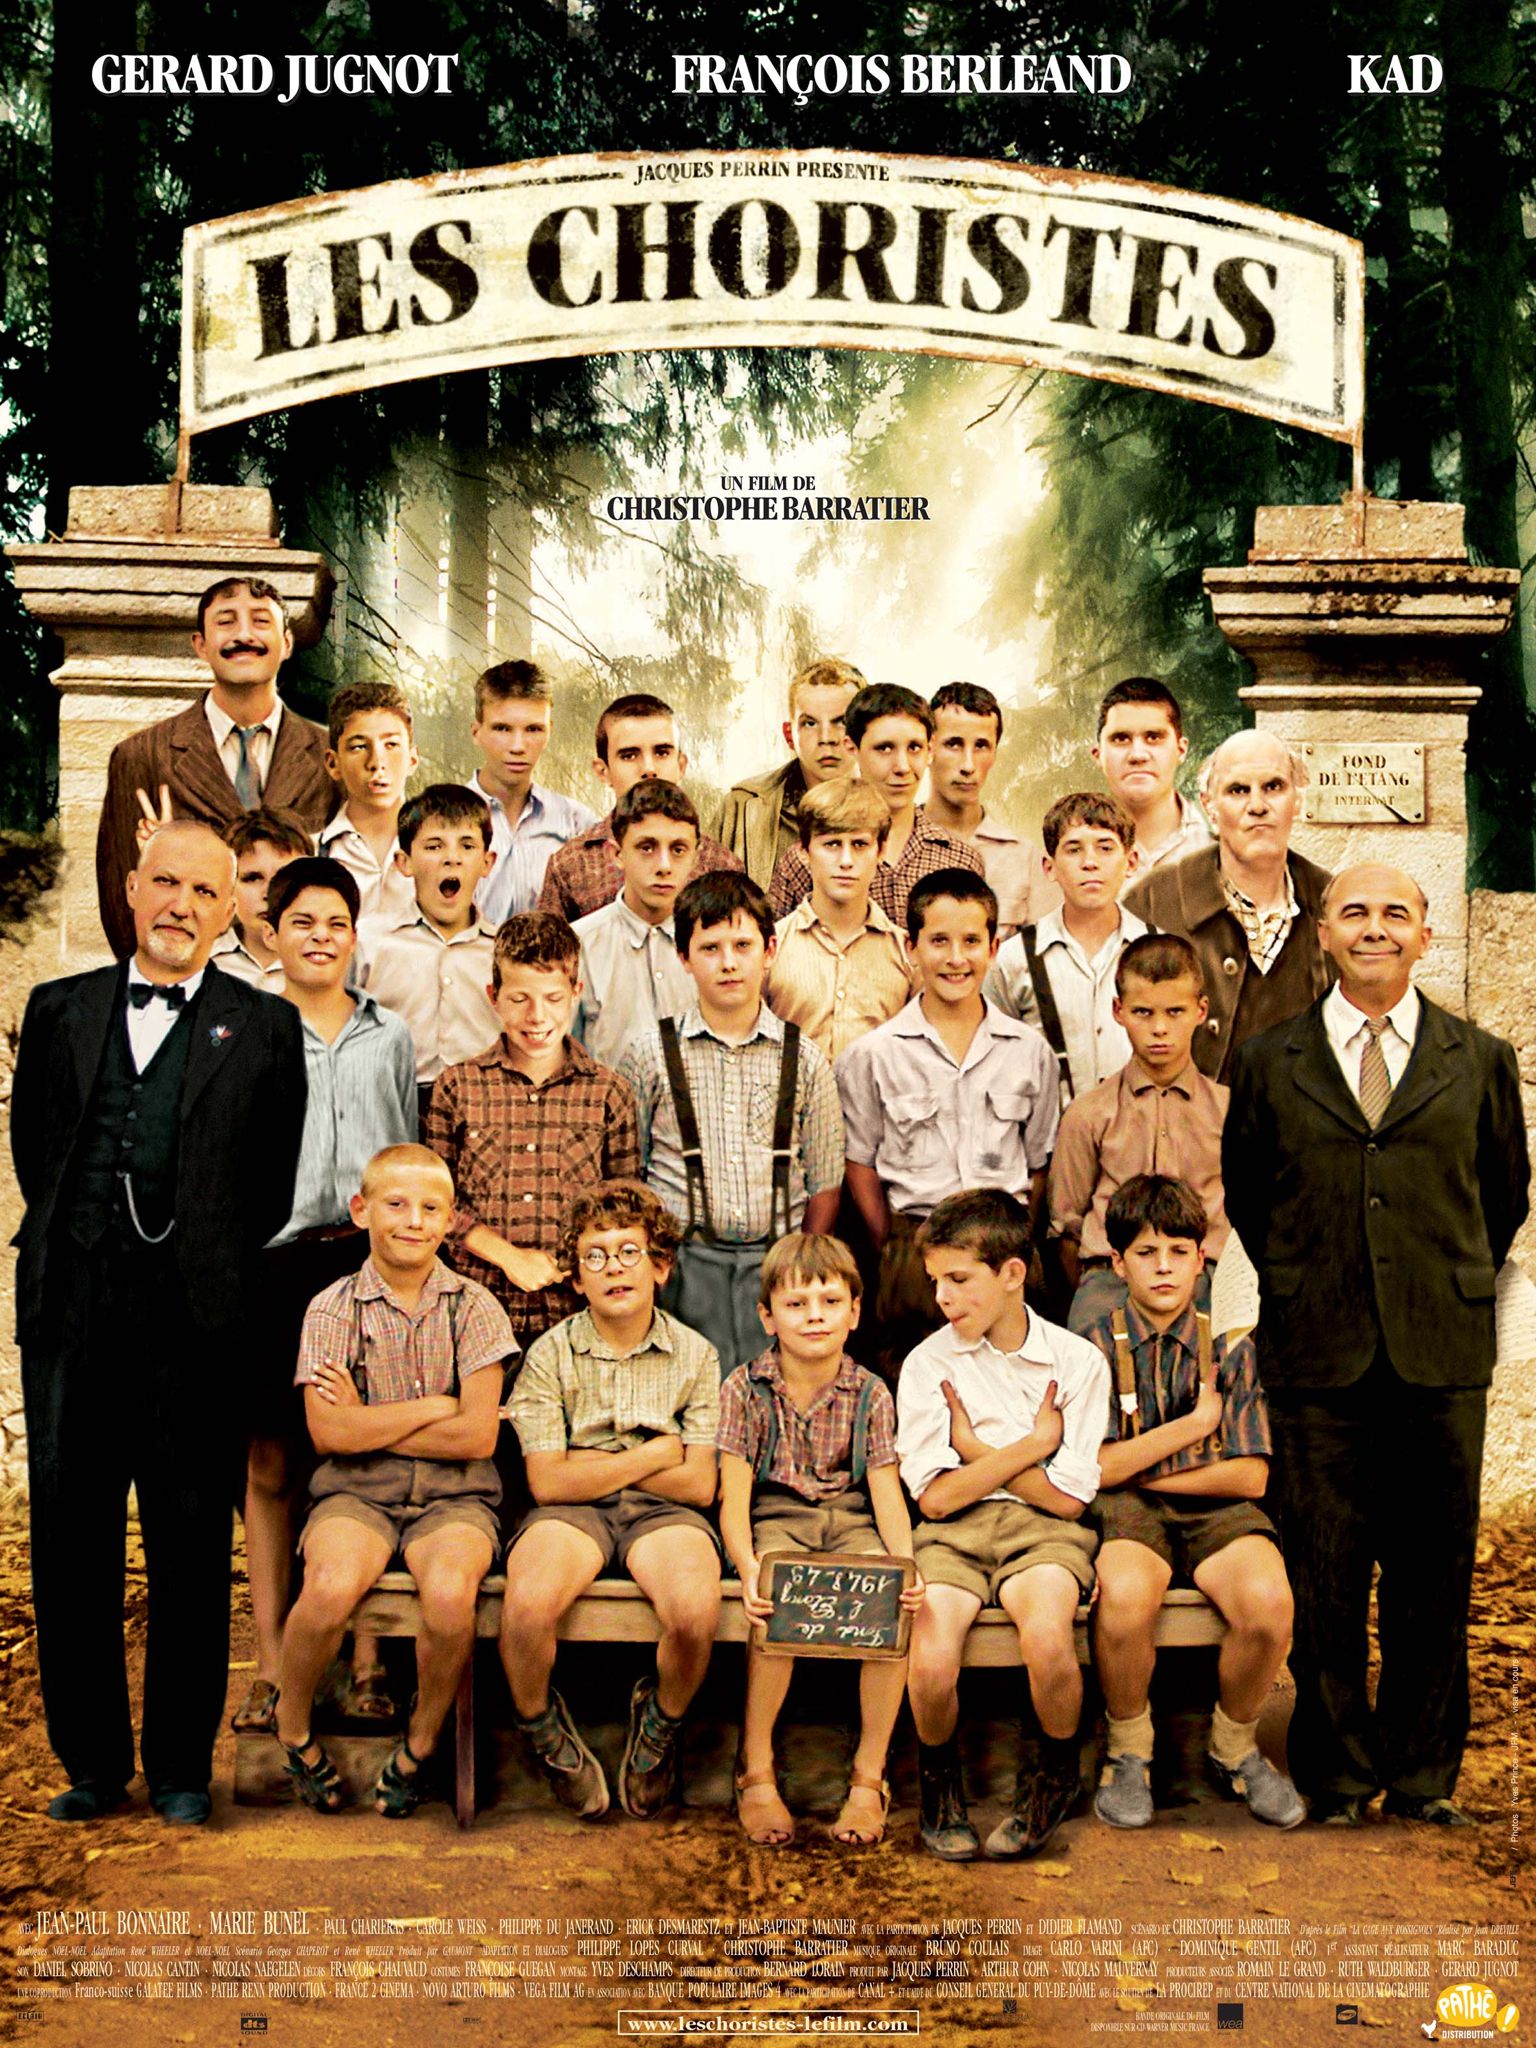 Les Choristes (2004) ★★★★☆